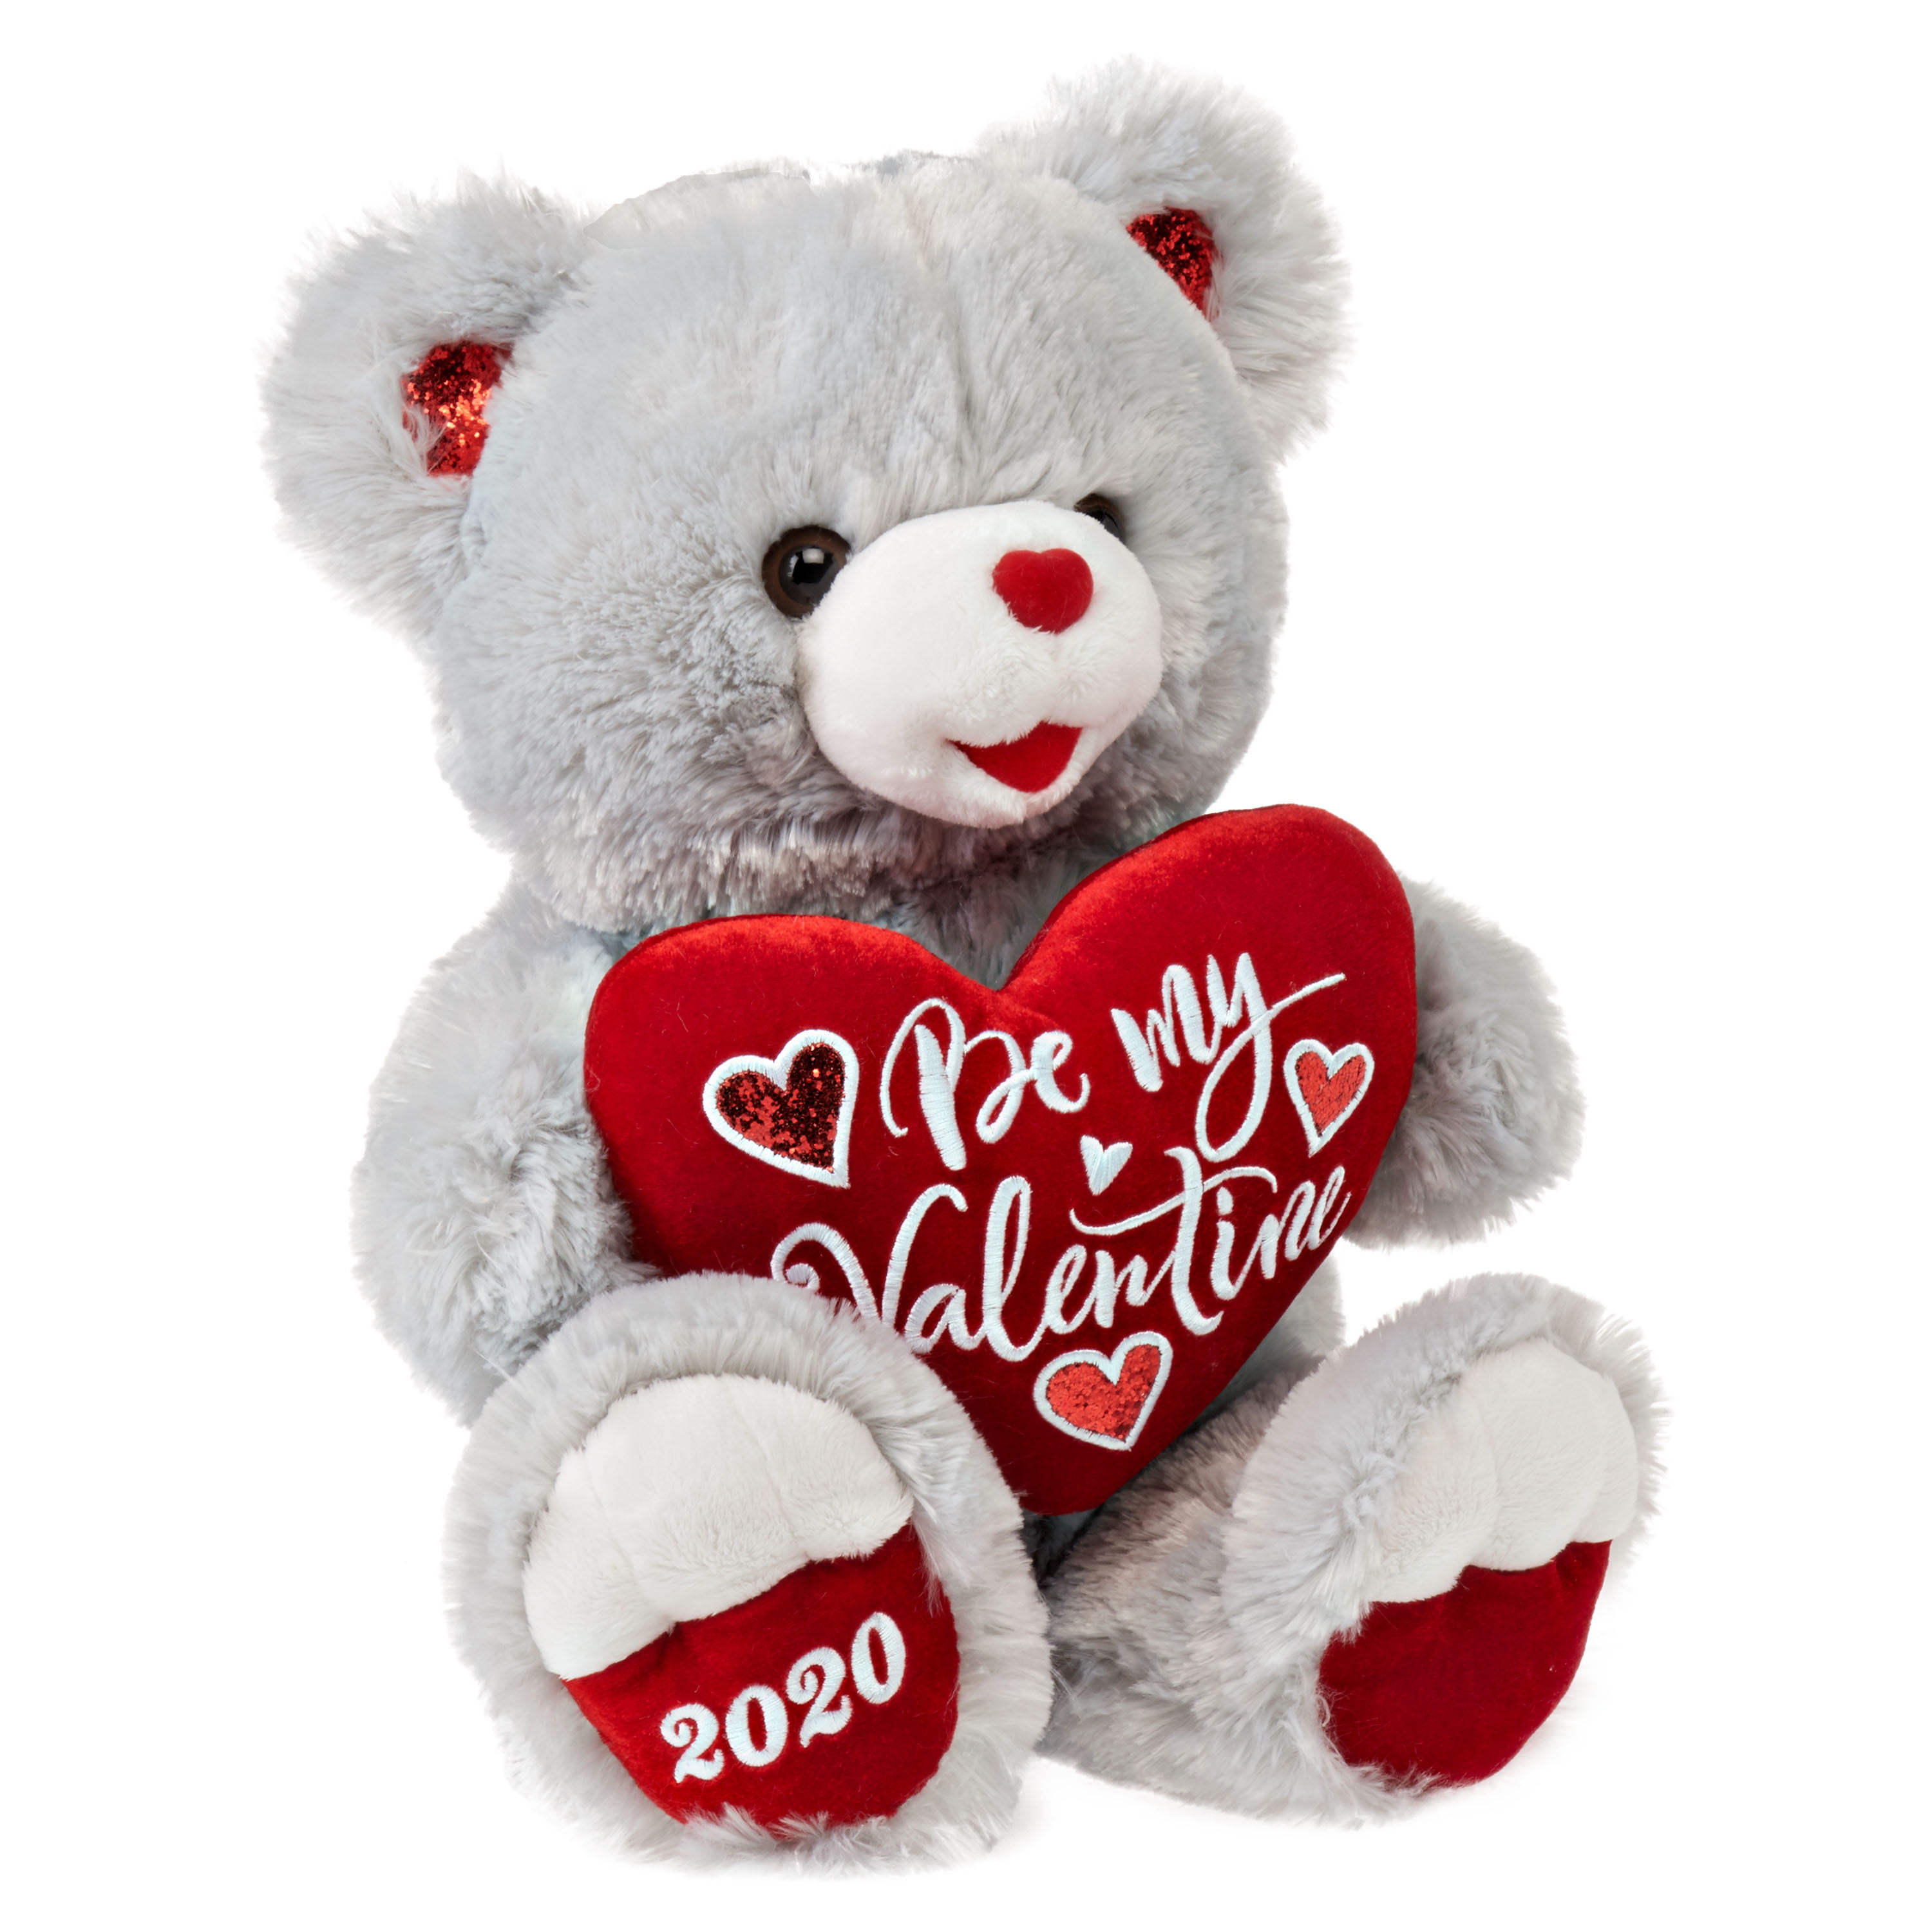 Walmart Sweet Brown Teddy Bear Red Heart I LOVE YOU 2013 Gift Card FD-33432 